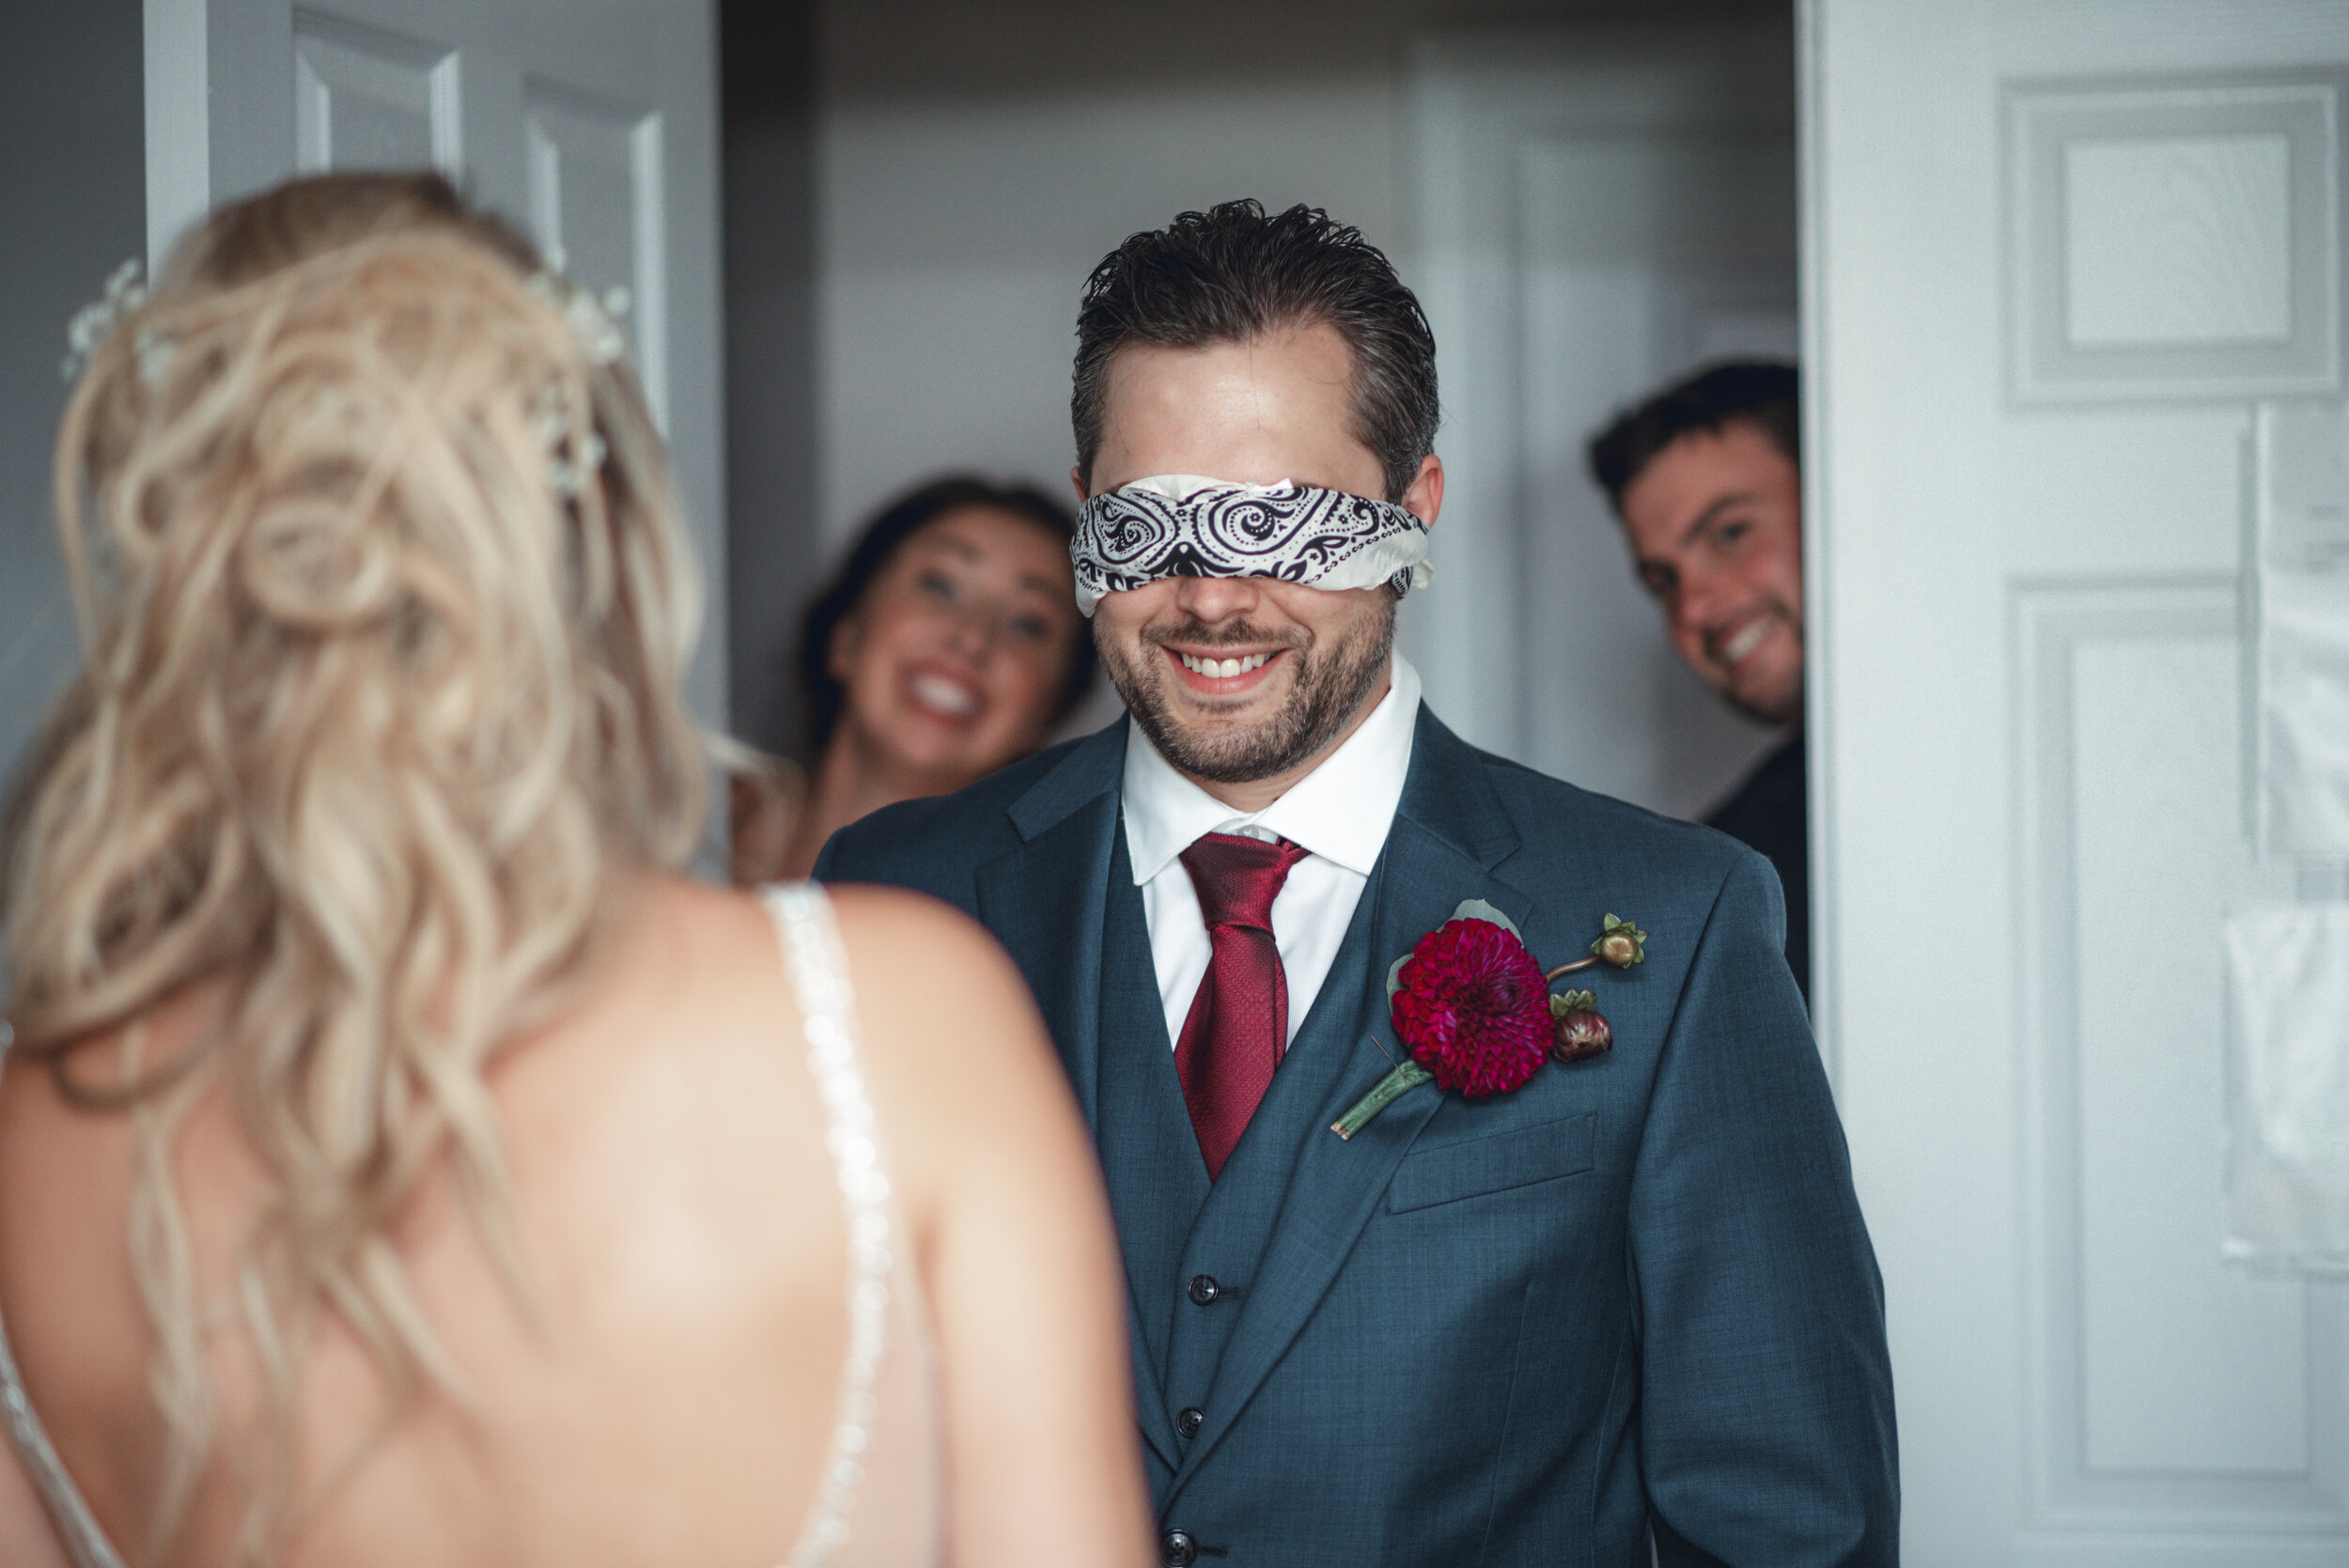 Blindfolded Groom sees Bride before wedding - eTangPhotography.com